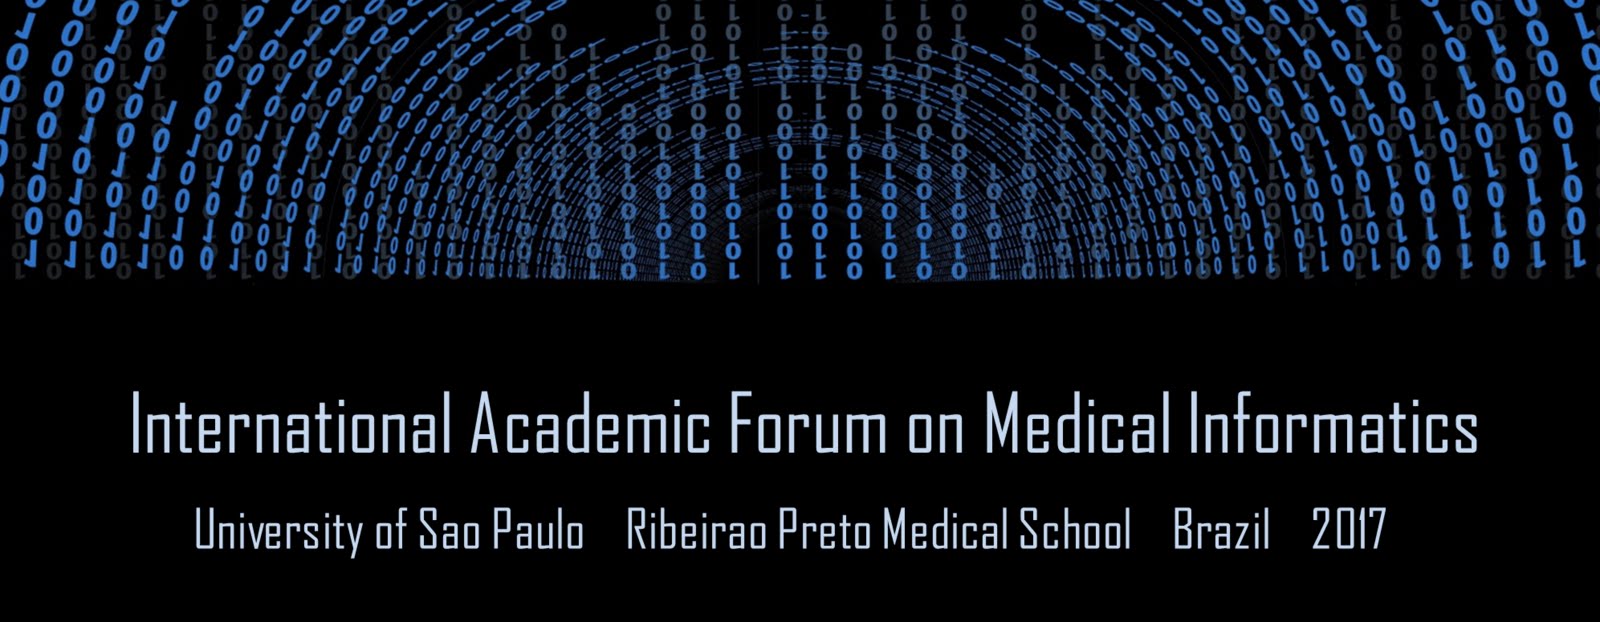 International Academic Forum on Medical Informatics